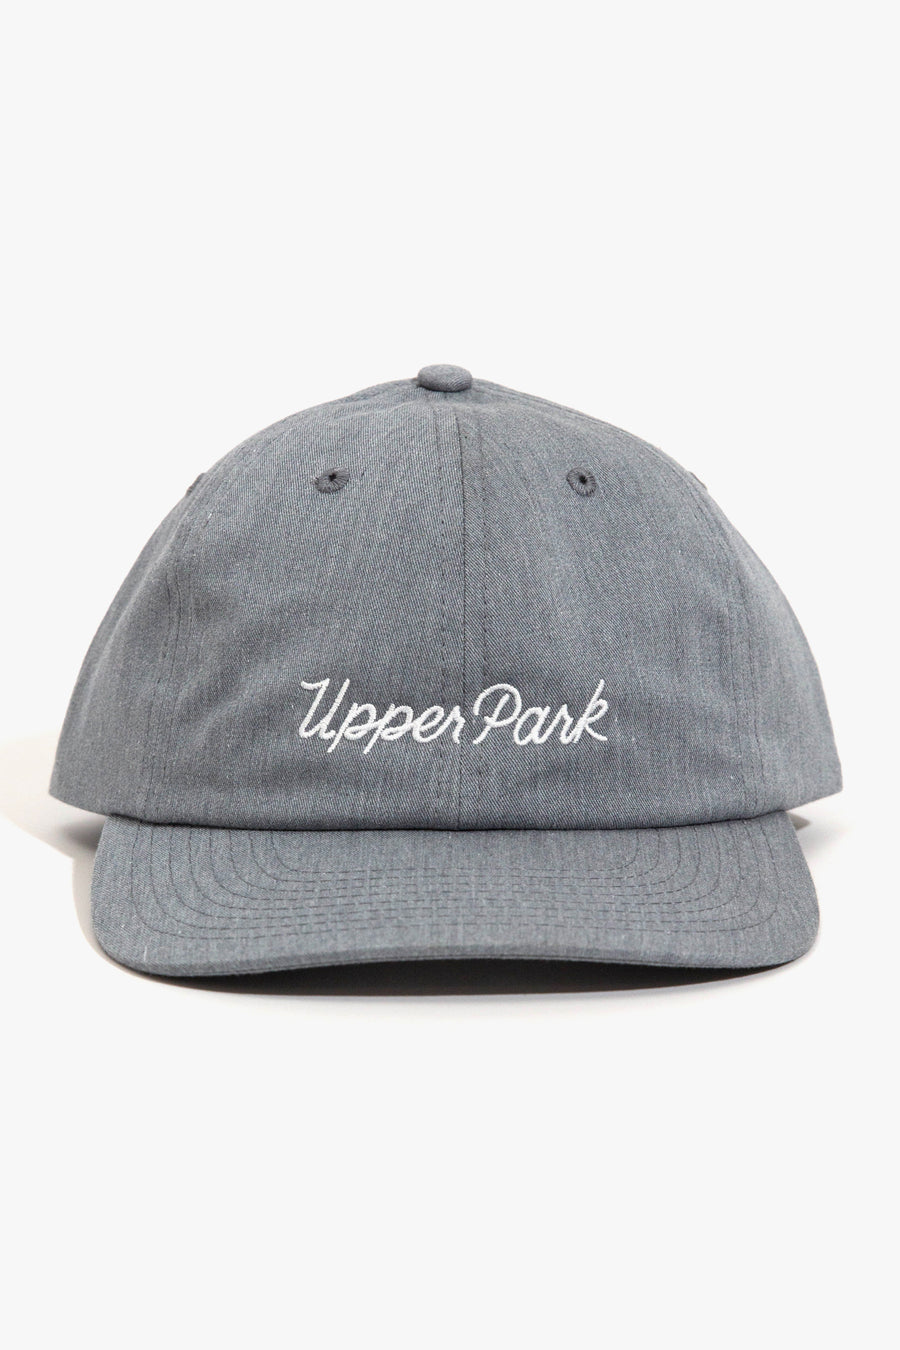 Cursive Upper Park Dad Hat